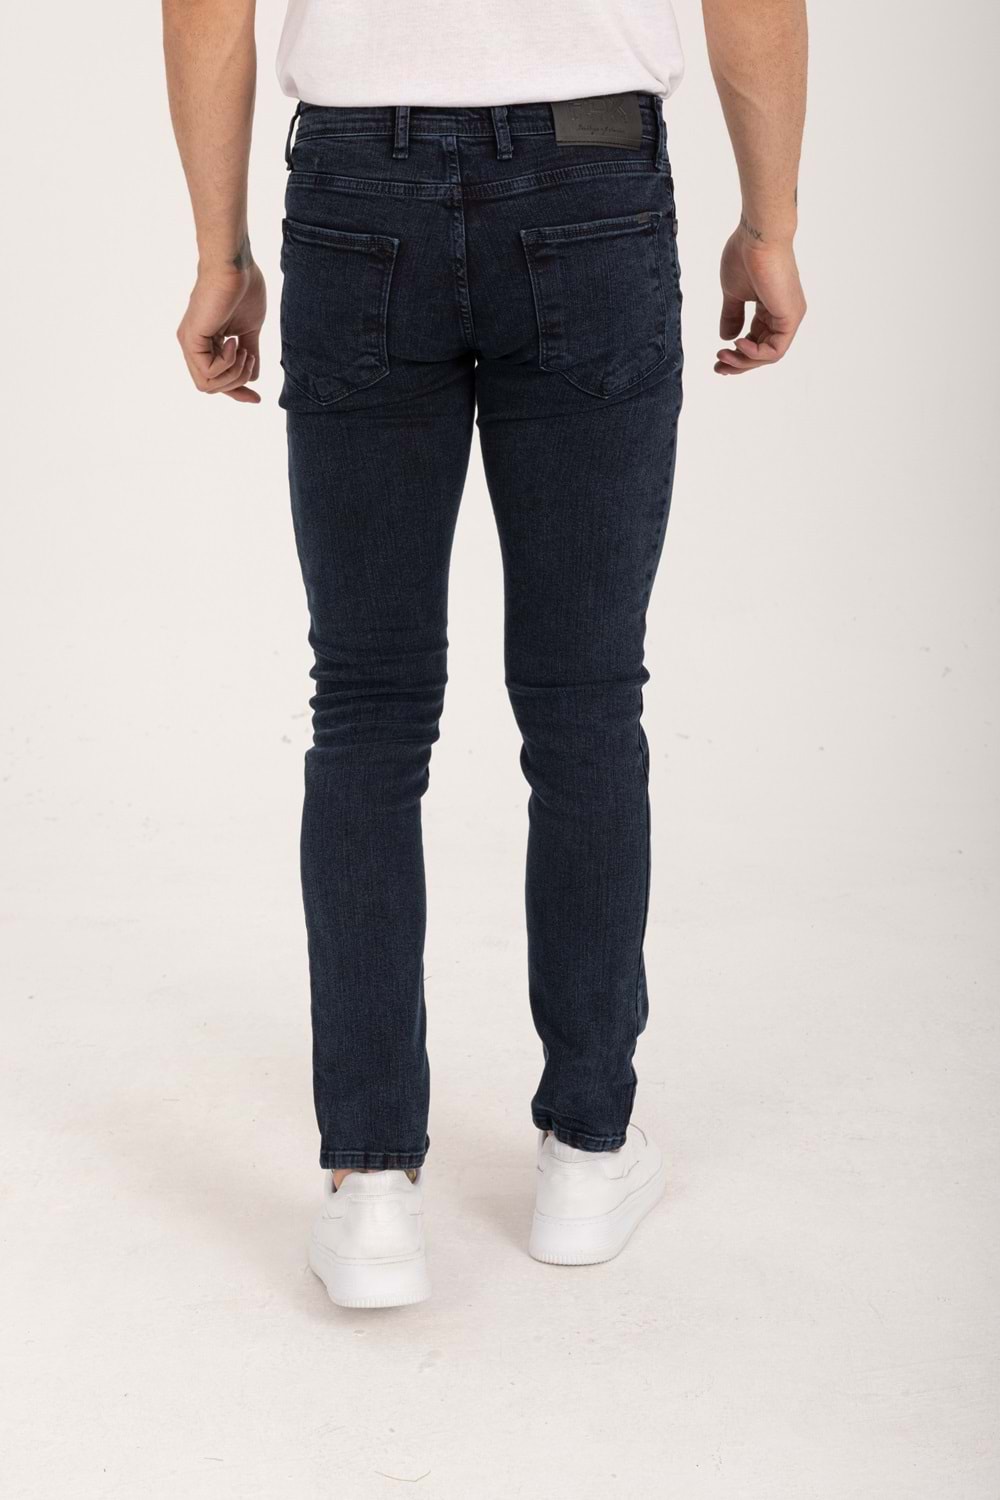 Fdx Jeans Lacivert Regular Fit Erkek Kot Pantolon